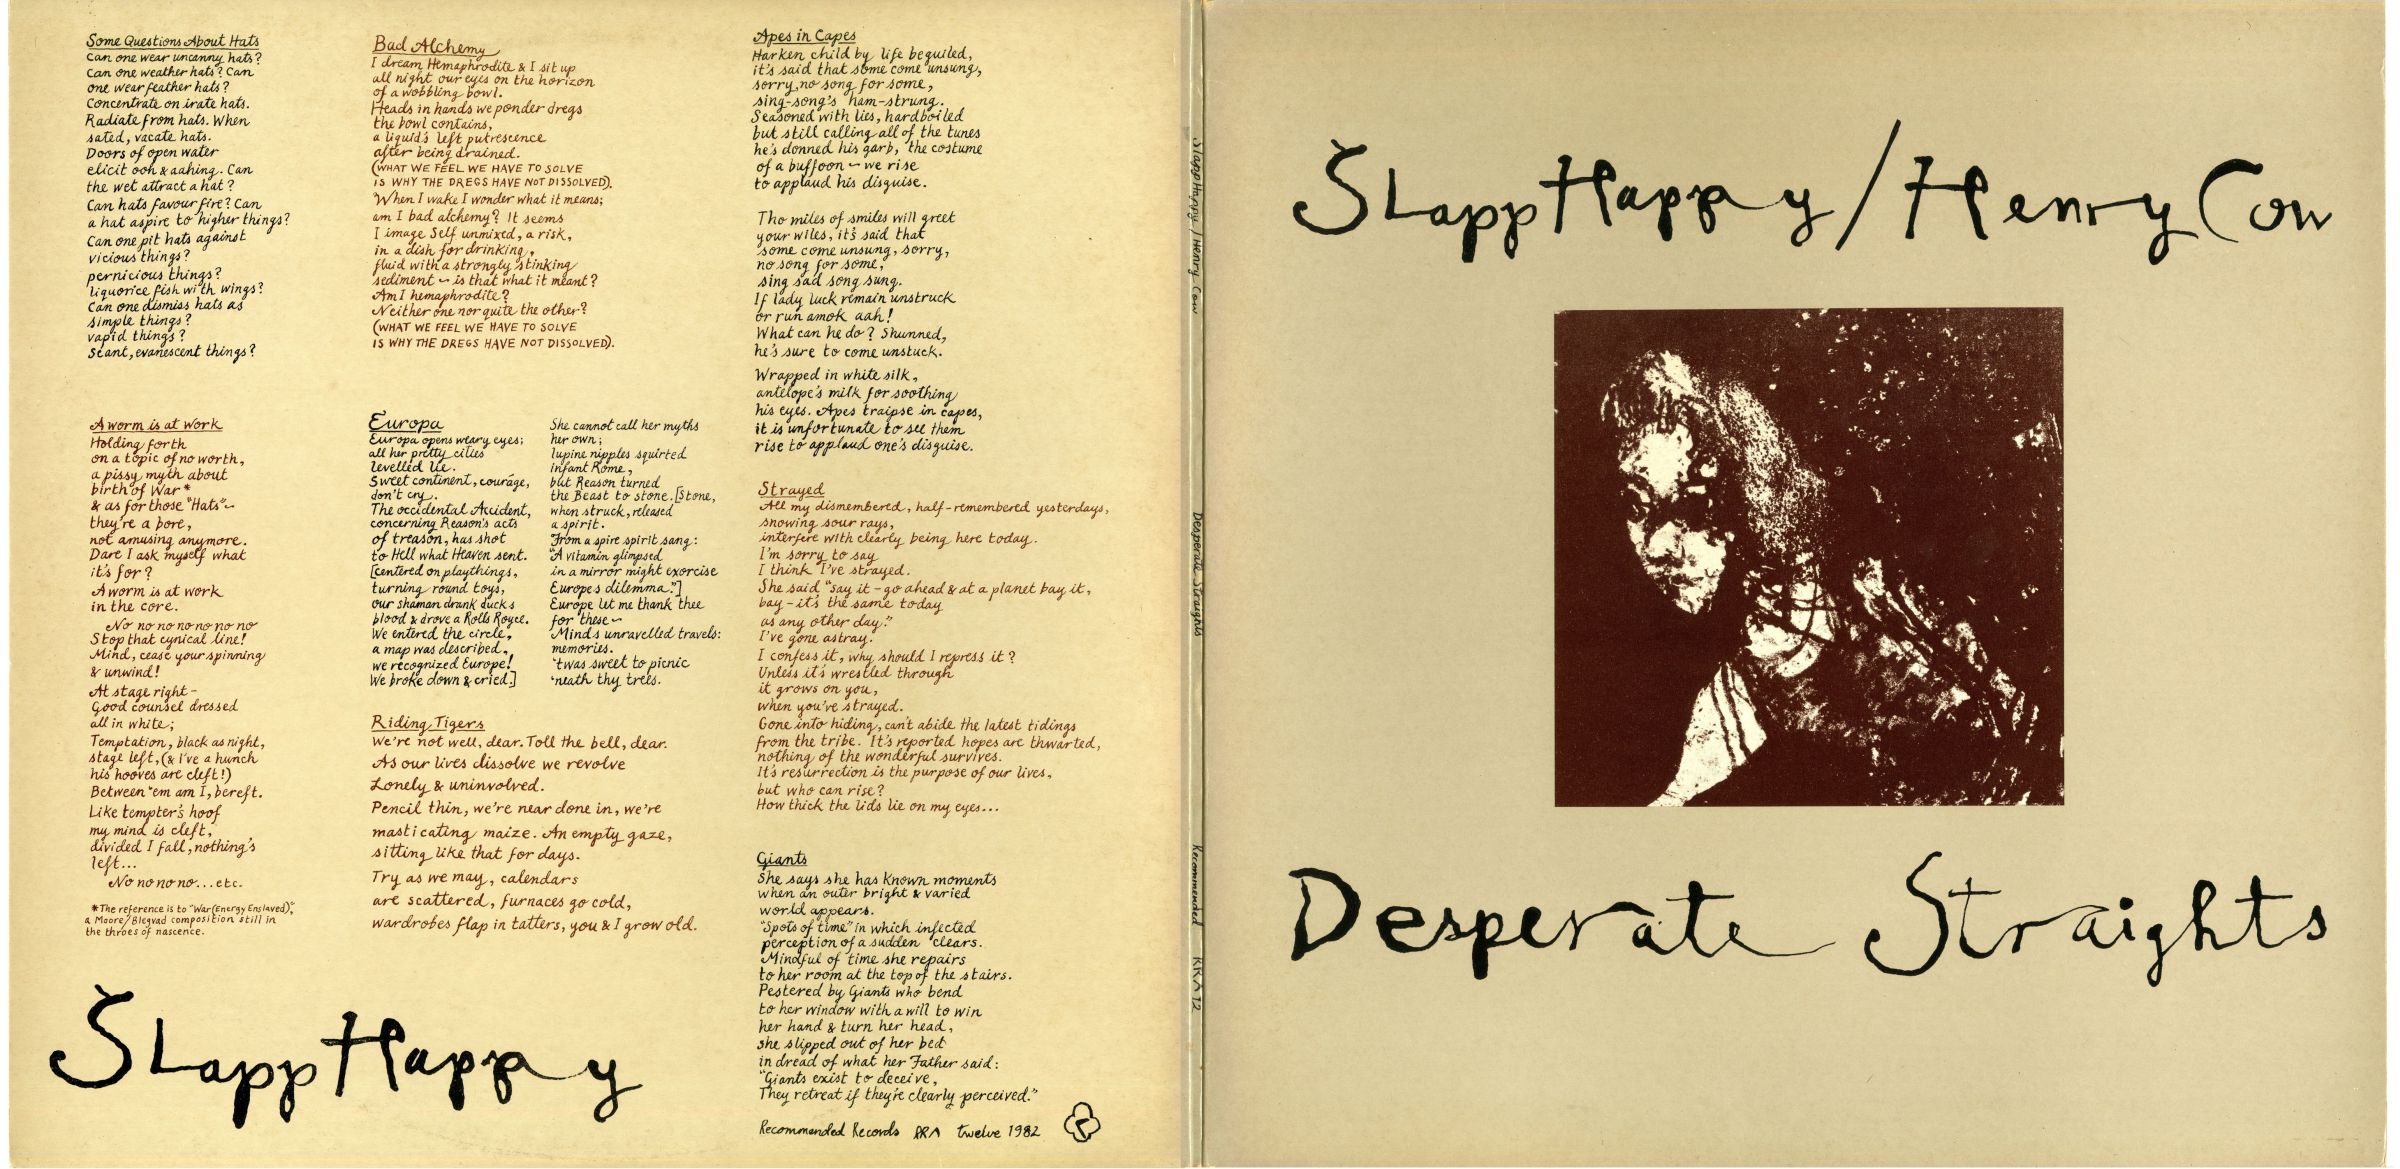 Henry Cow/Slapp Happy『Desperate Straights』01